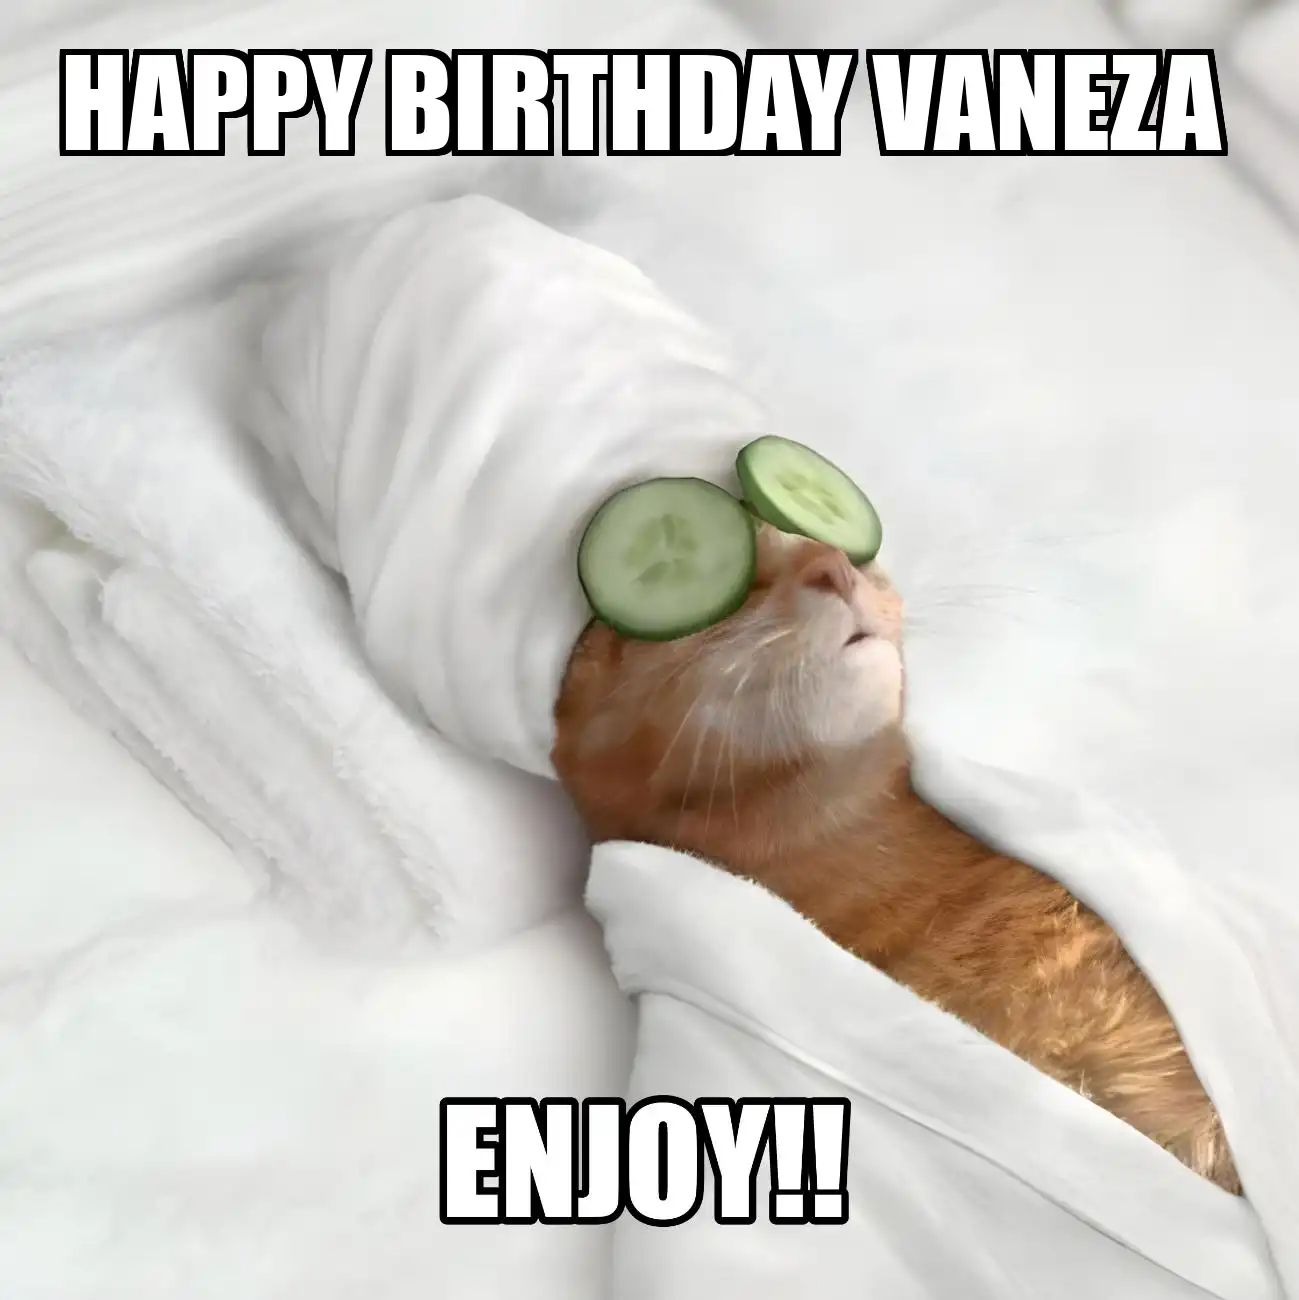 Happy Birthday Vaneza Enjoy Cat Meme